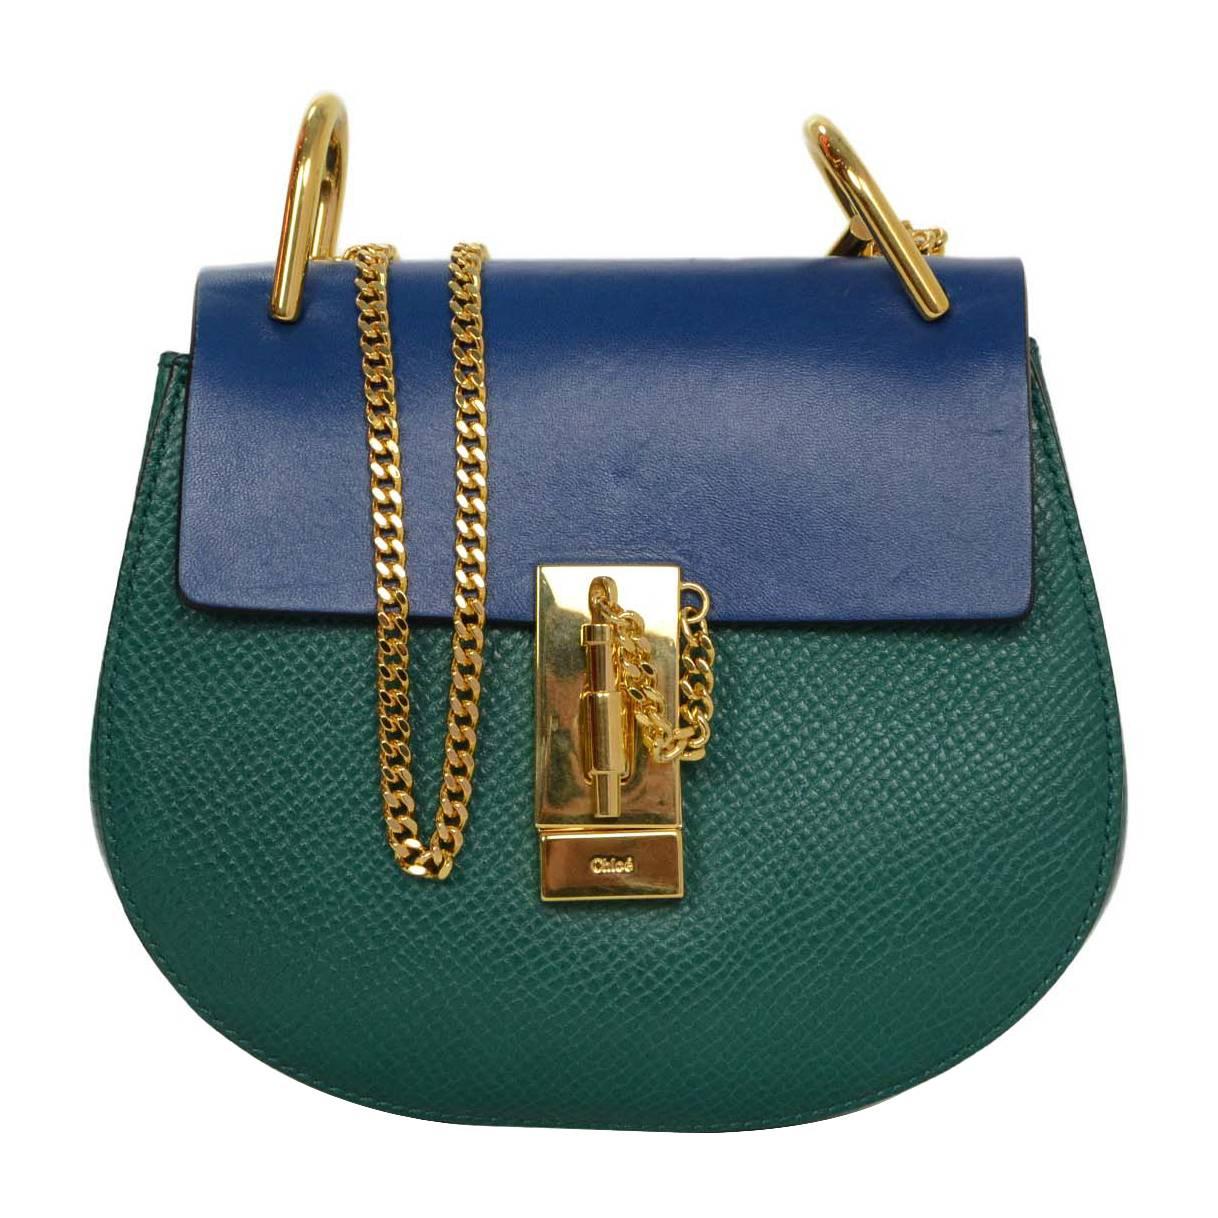 Chloe Blue and Green Bicolor Drew Small Crossbody Bag GHW rt. $1, 950